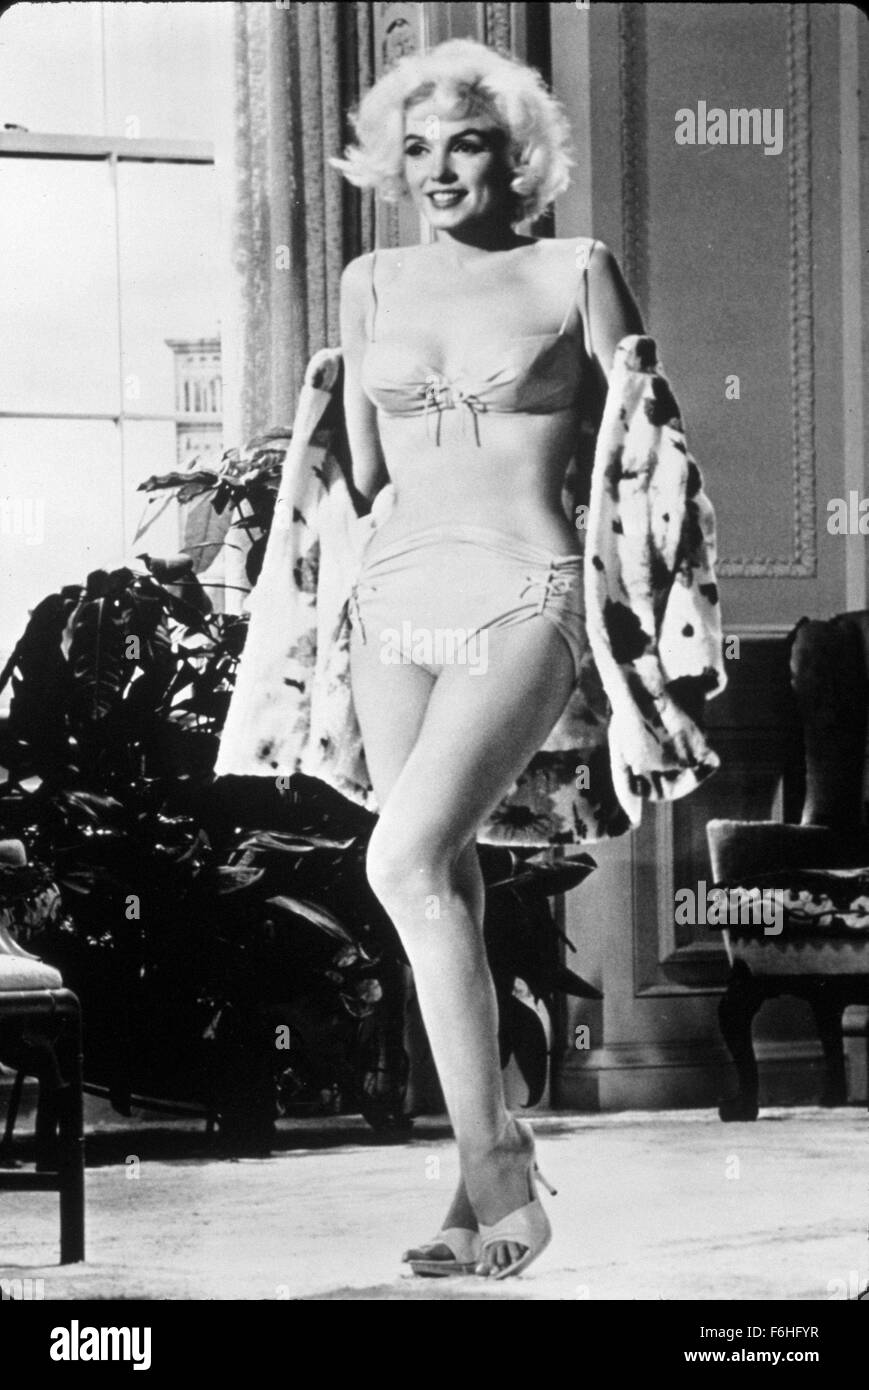 Marilyn monroe bikini hi-res stock photography and images - Alamy